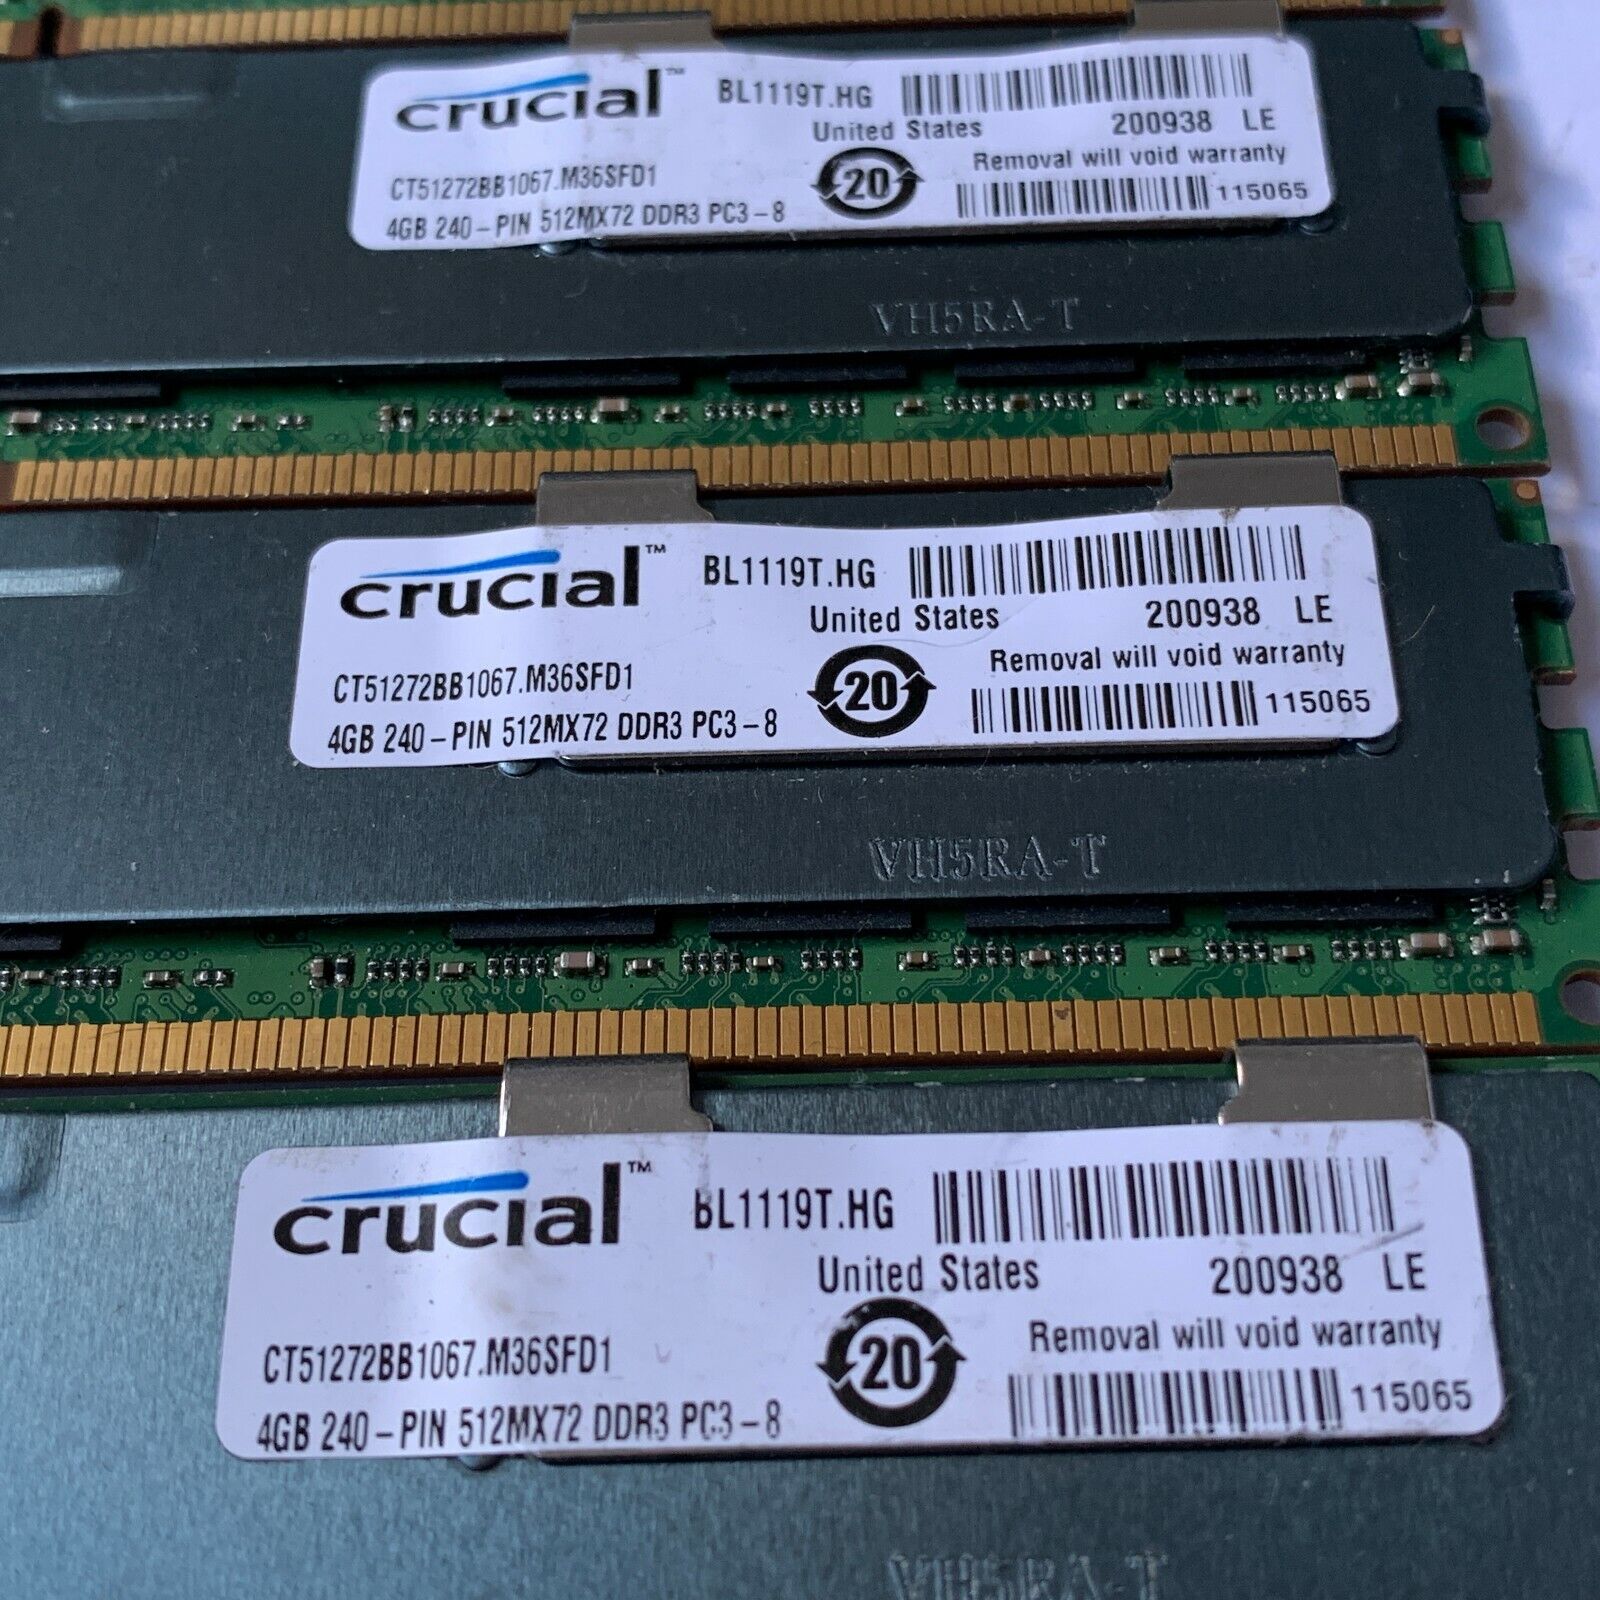 Crucial 4GB 240-PIN 512MX72 DDR3 PC3-8 CT51272BB 1067 M36SFD1 LOT OF 6